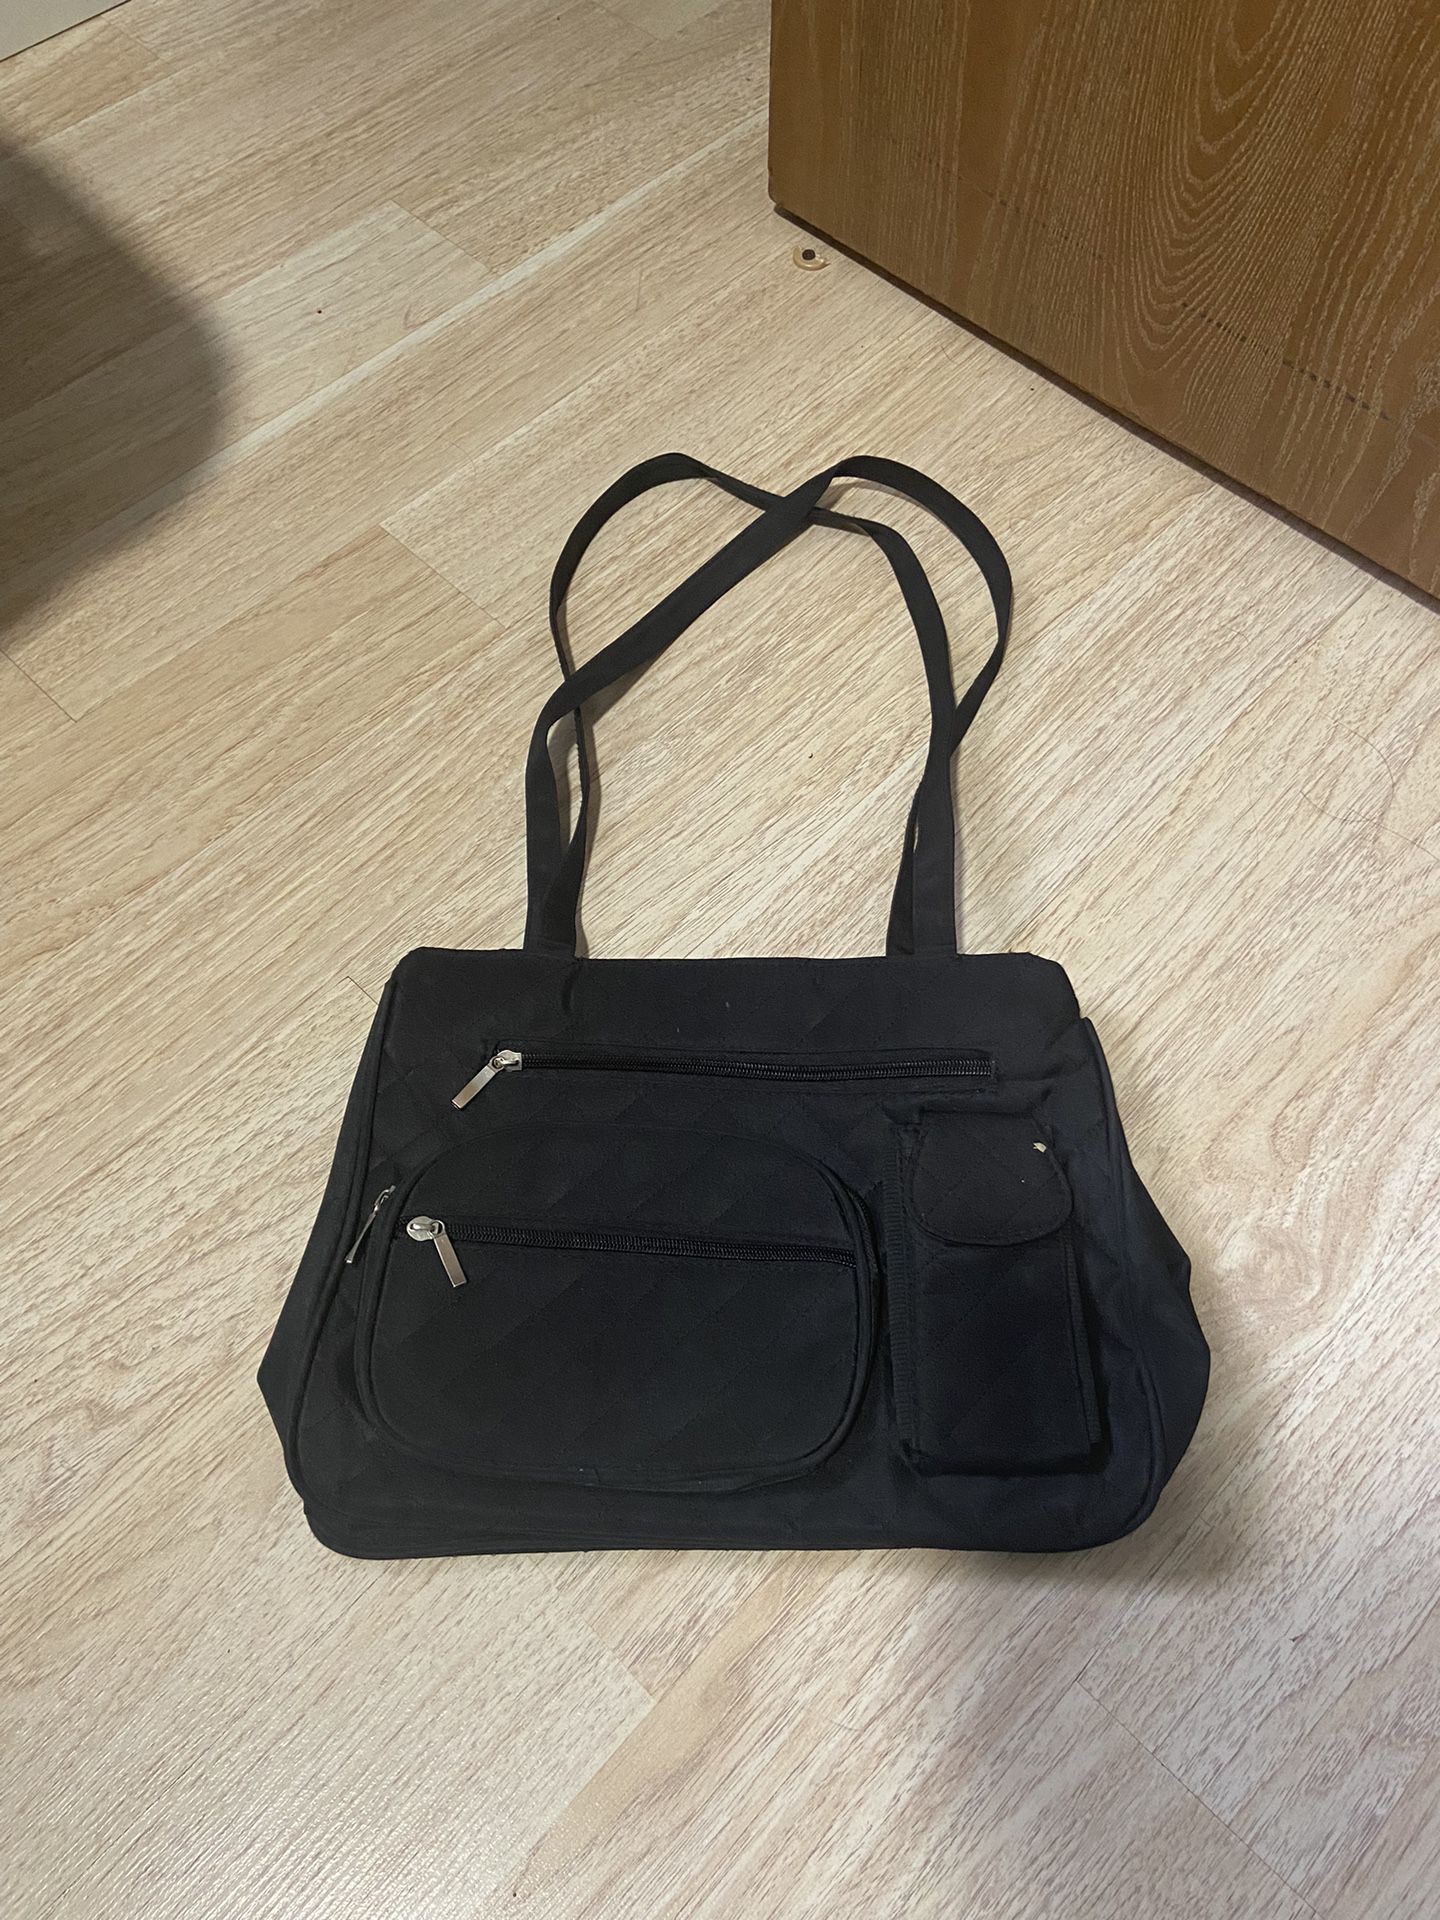 Black Quilted Tote Bag/Handbag/Purse